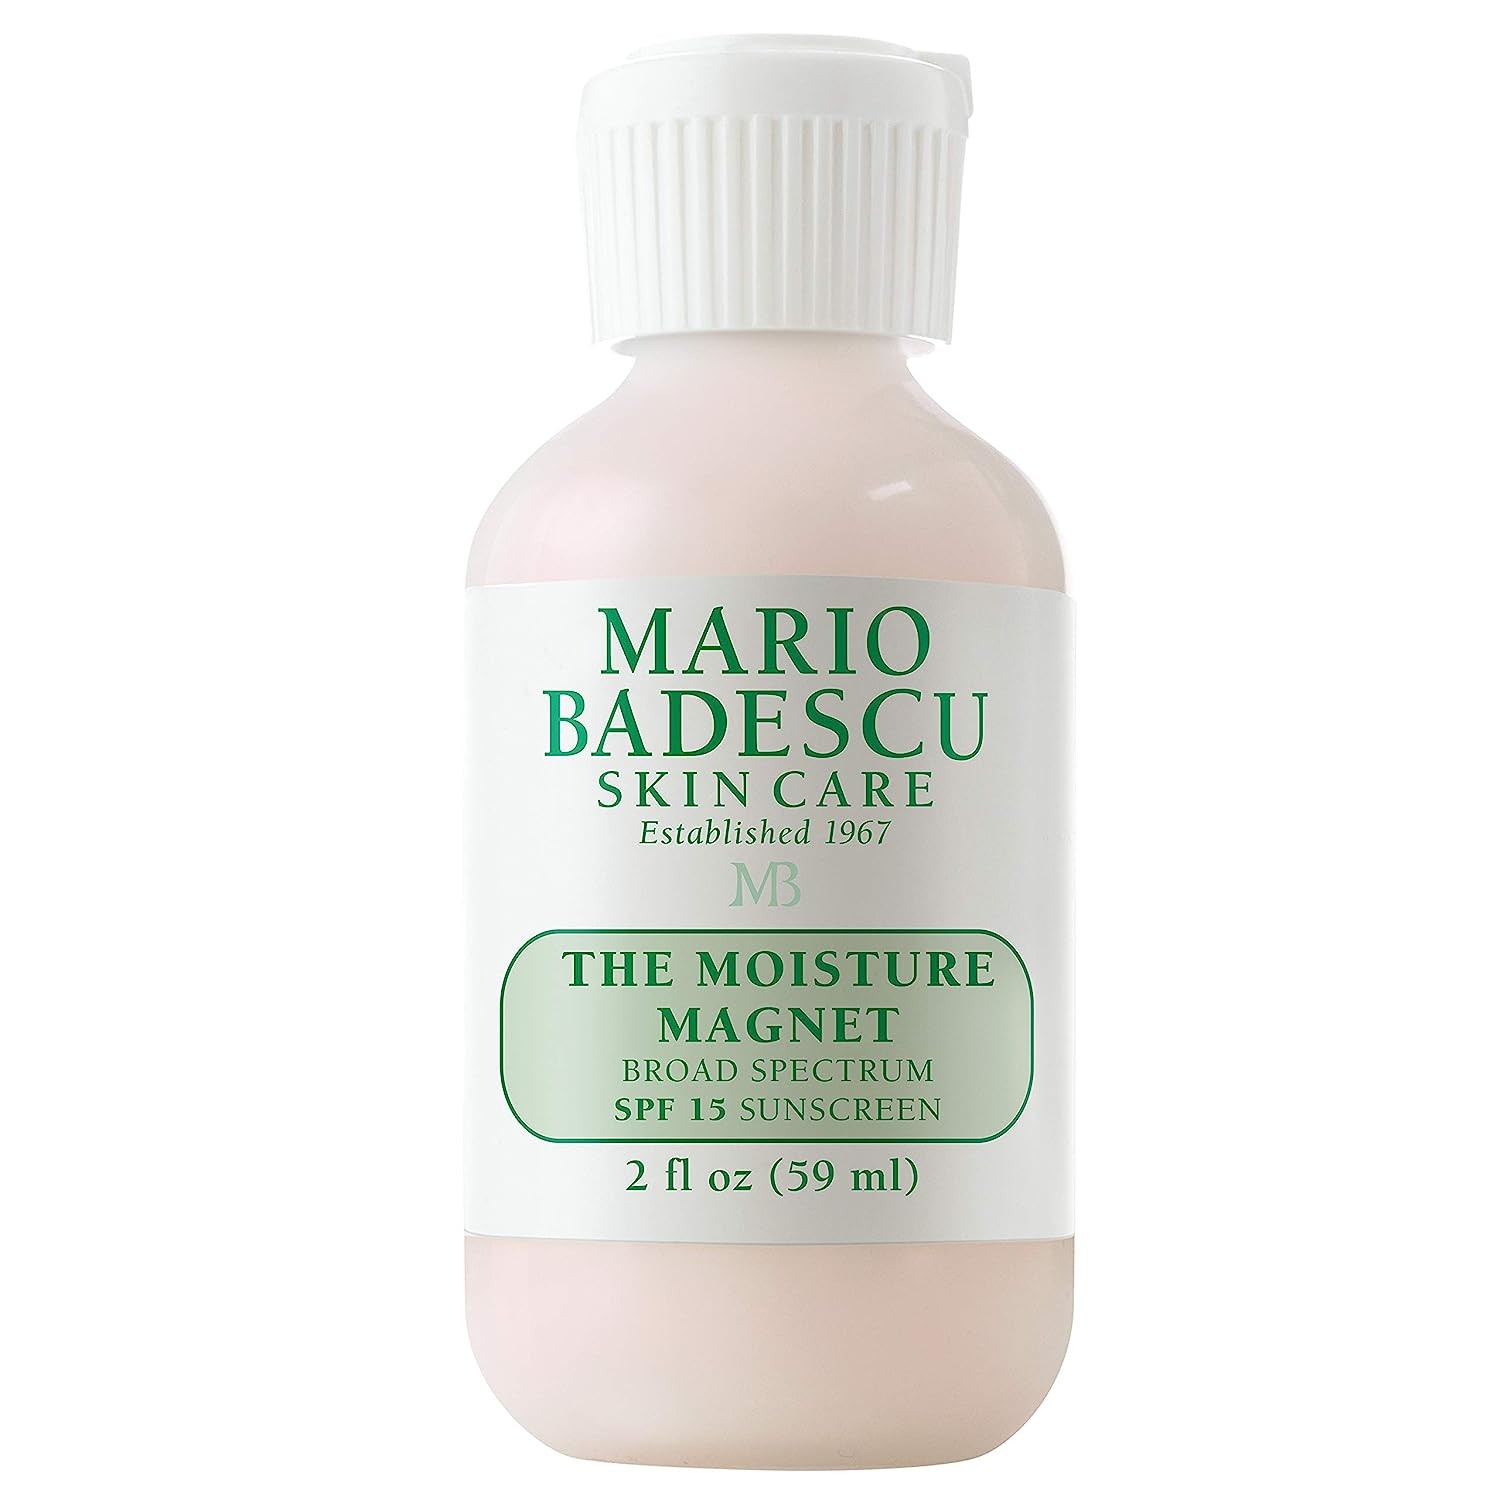 Mario Badescu Skin Care The Moisture Magnet 2 fl oz.